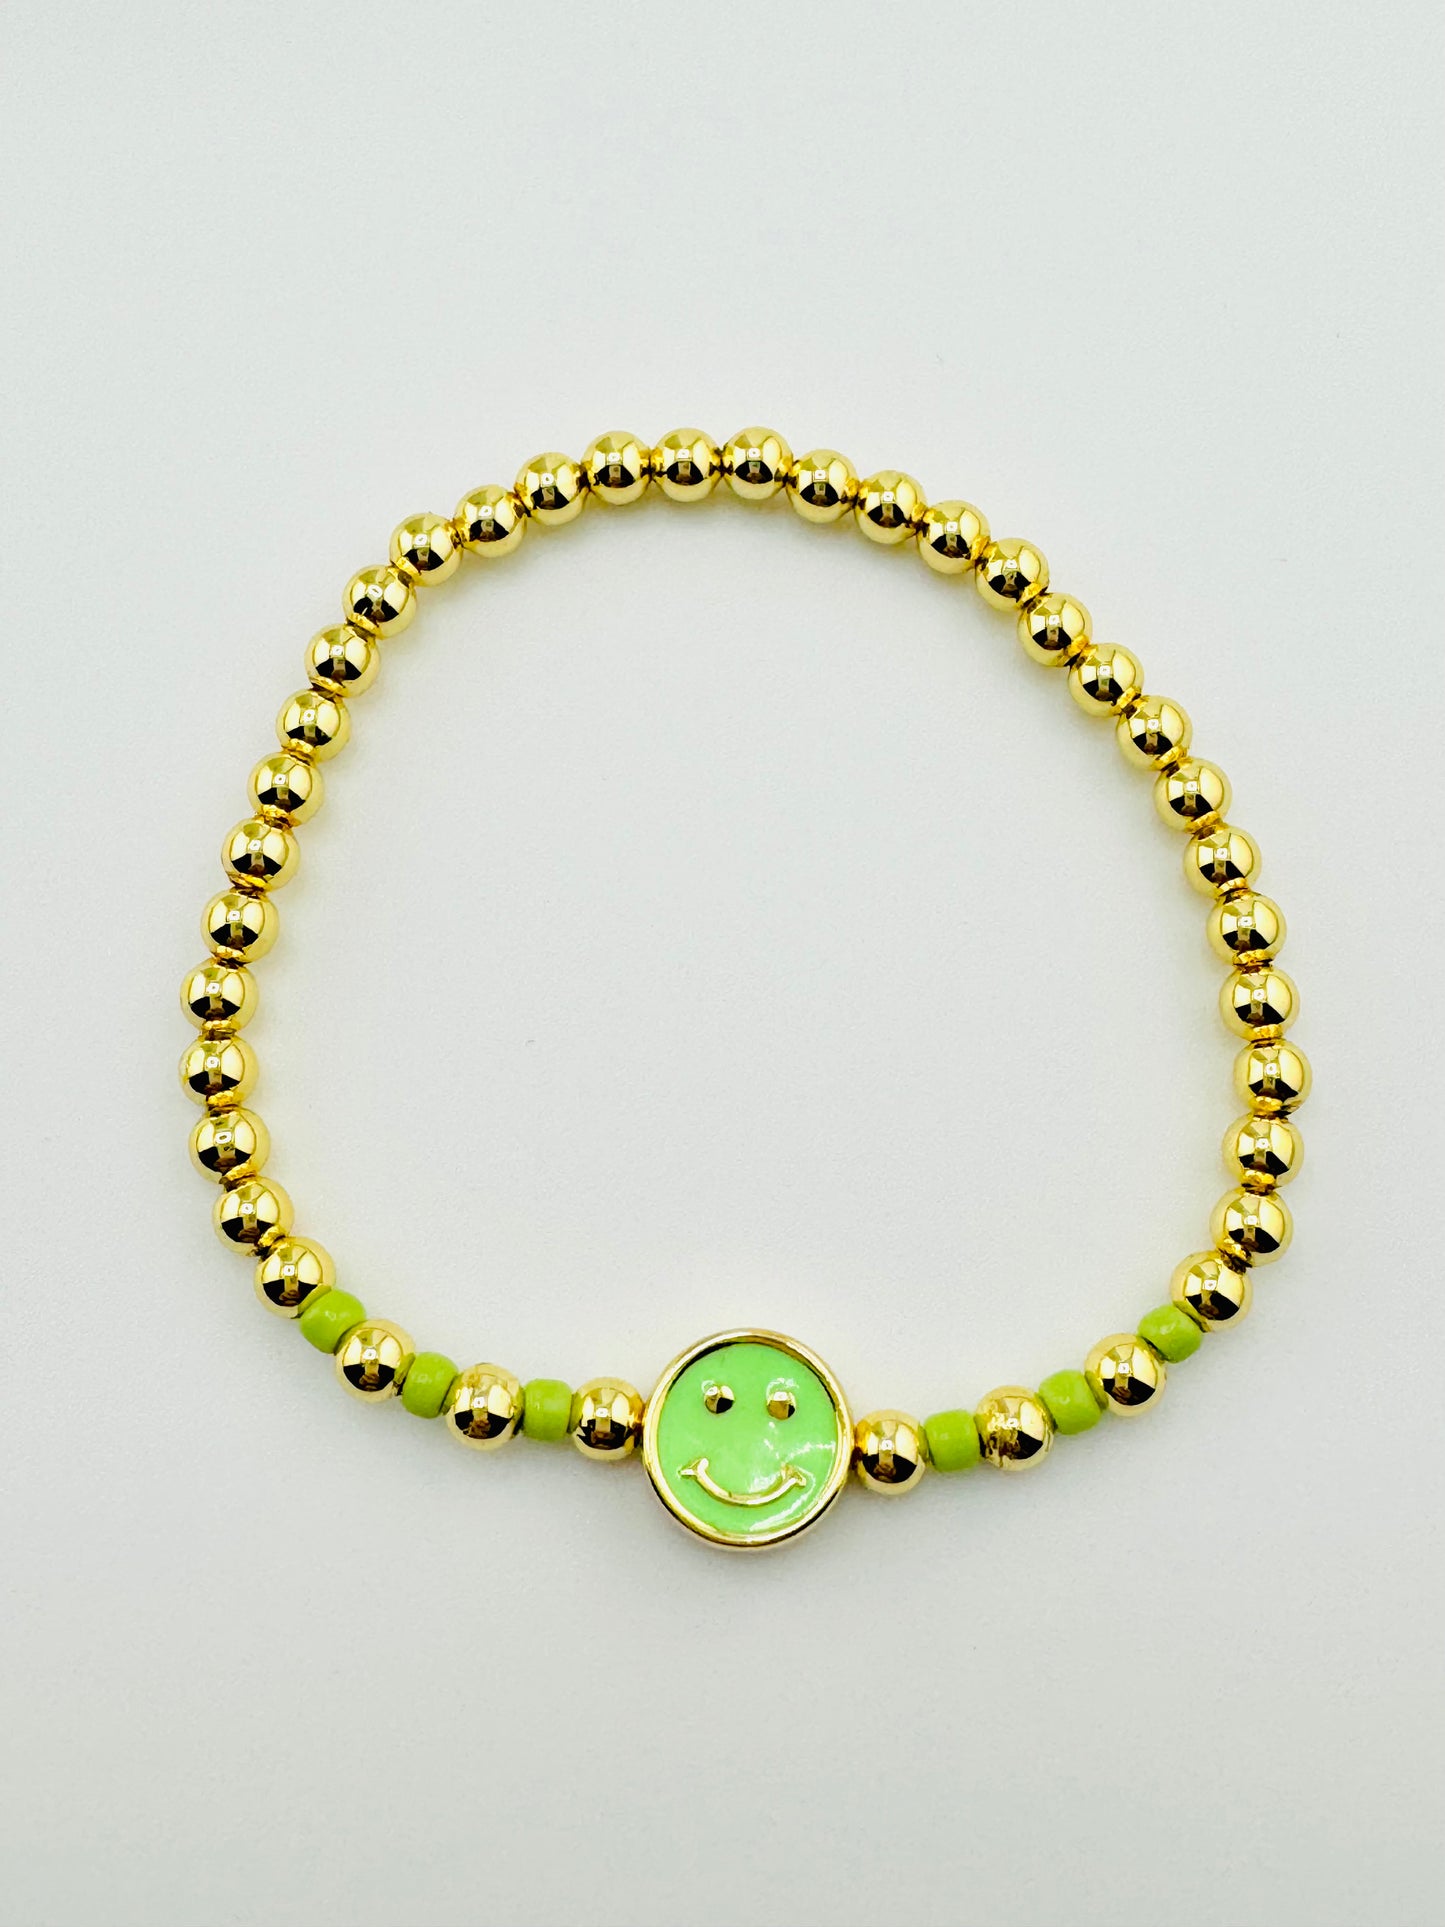 Athena lime green and gold filled bracelet